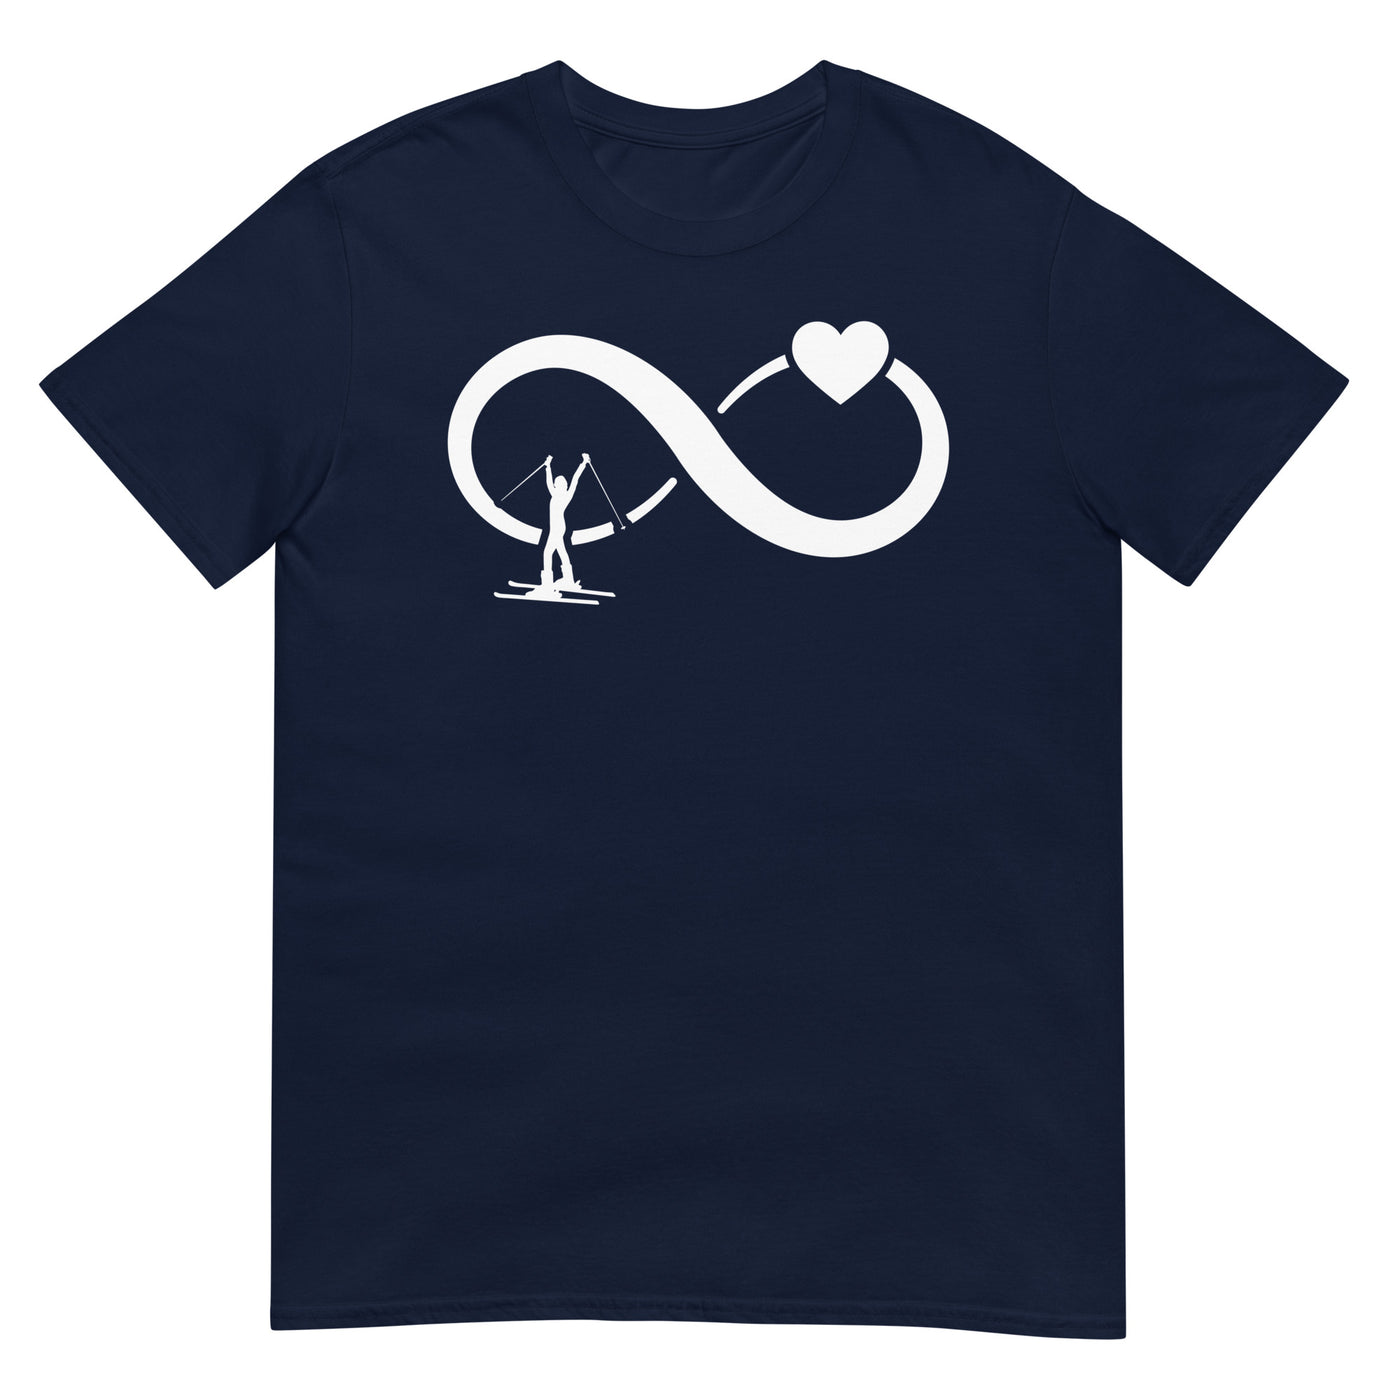 Infinity Heart and Skiing 1 - T-Shirt (Unisex) klettern ski xxx yyy zzz Navy